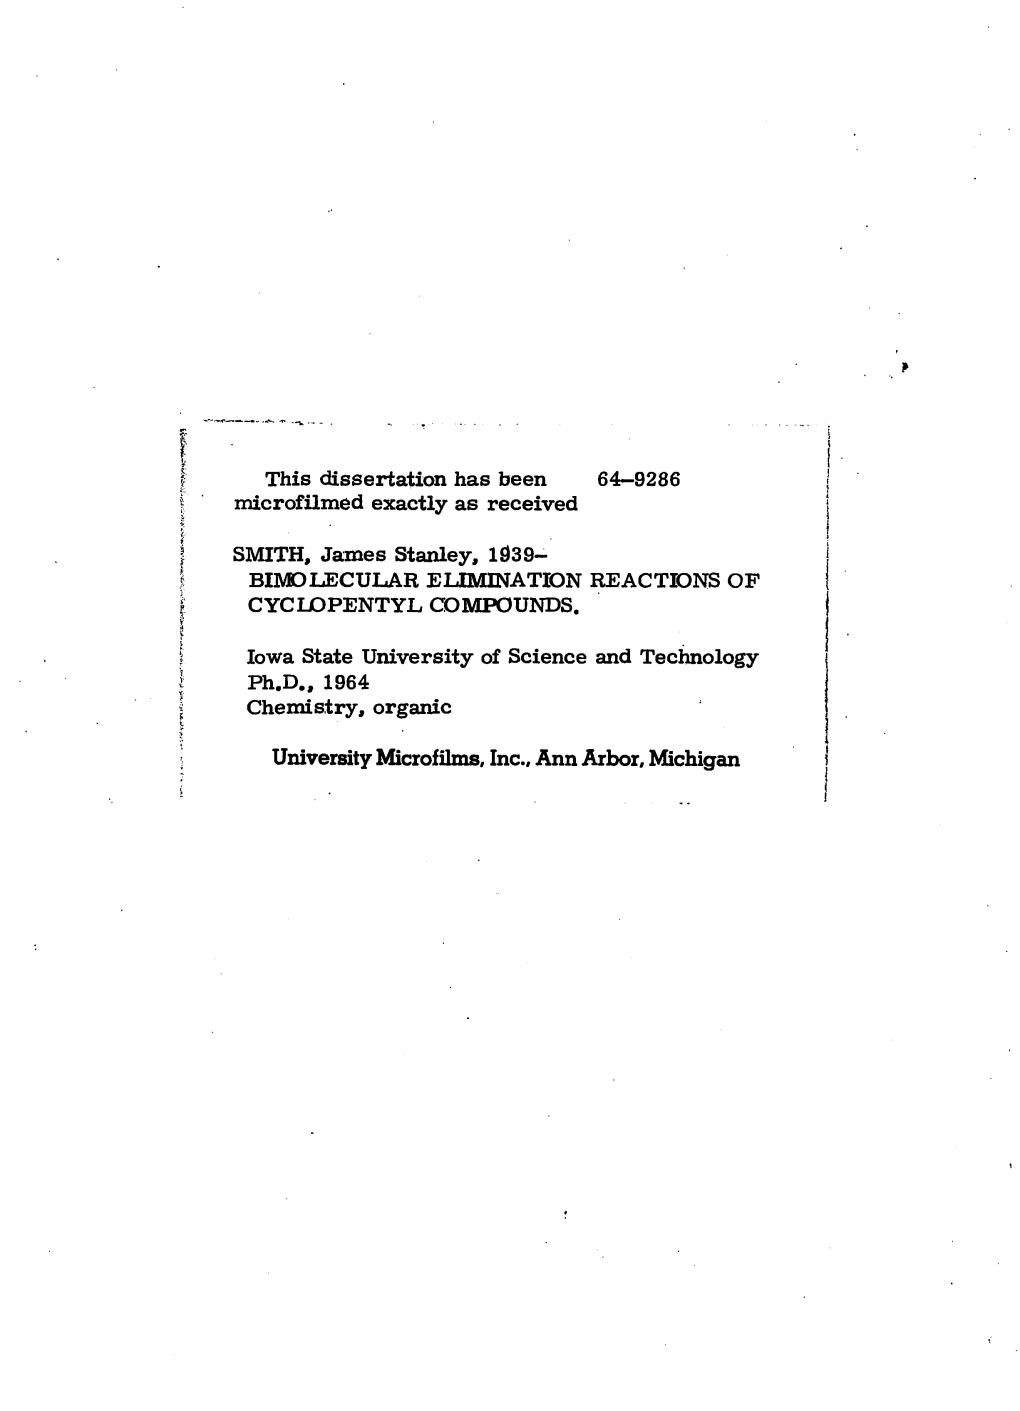 University Microfilms, Inc., Ann Arbor, Michigan BIMOLECULAR ELIMINATION REACTIONS OF